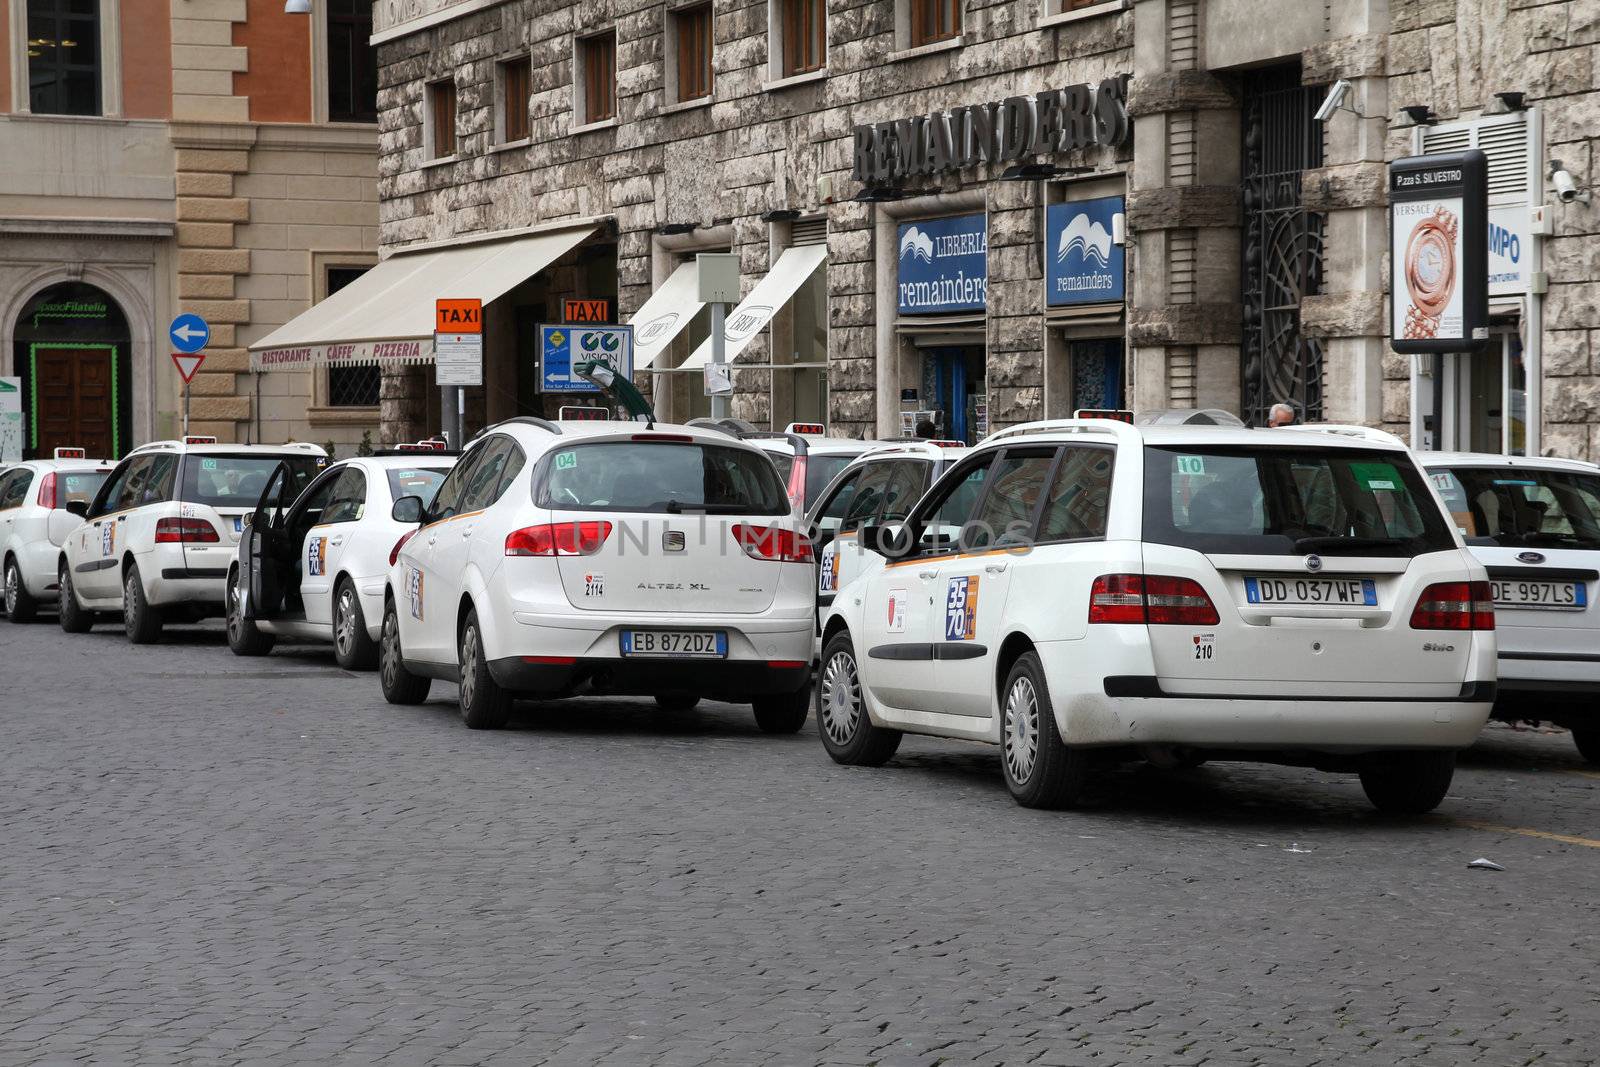 Rome taxi by tupungato